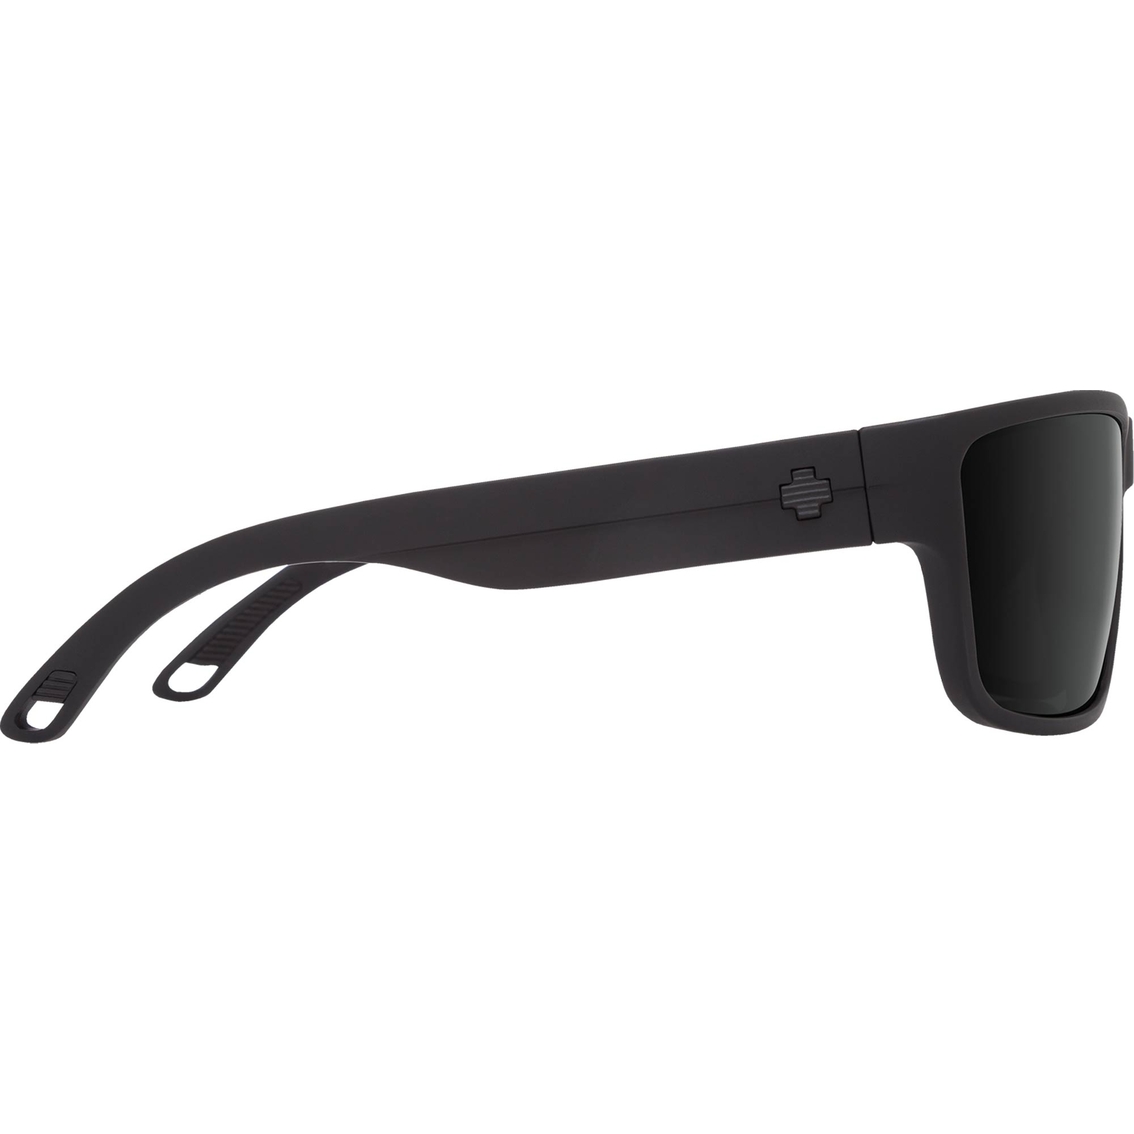 Spy Optic Rocky Standard Issue Sunglasses 6800000000107 - Image 4 of 5